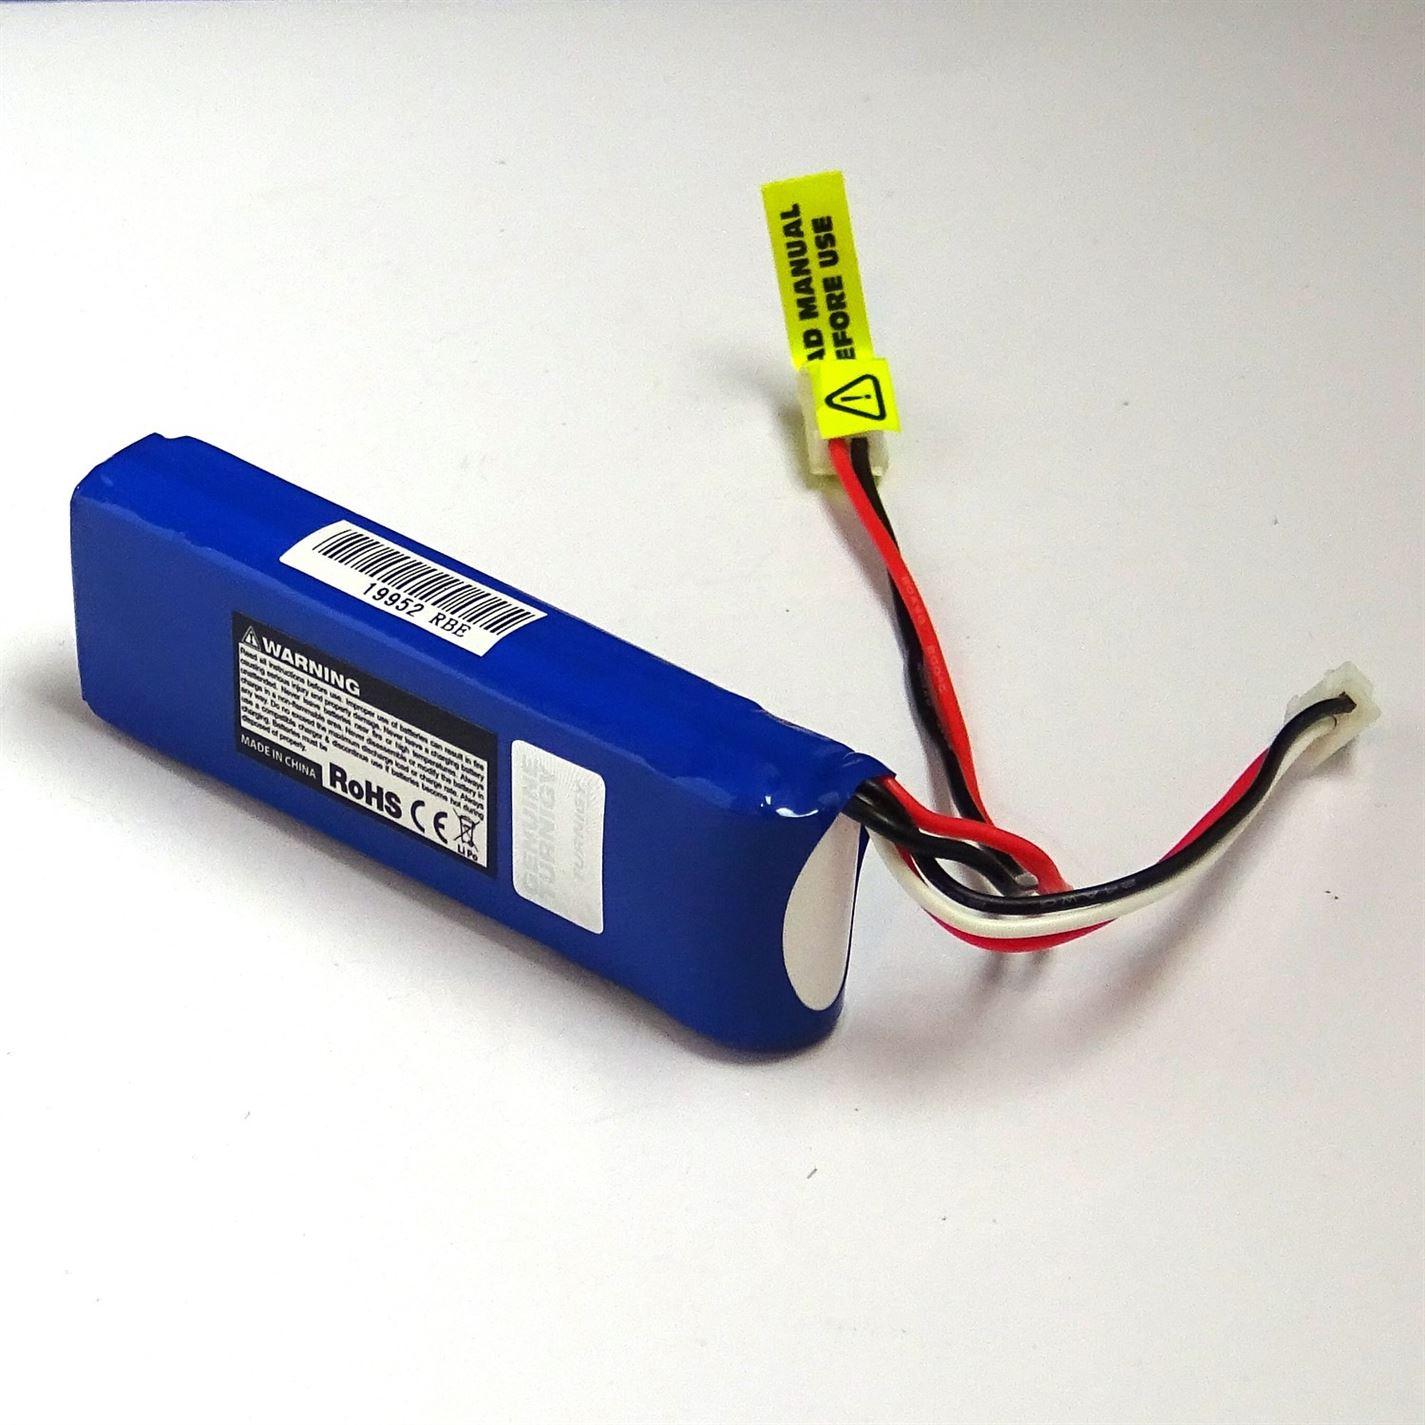 Turnigy 1600mAh 2S 20C Lipo Battery Pack (Losi Mini Compatible) - UK Seller